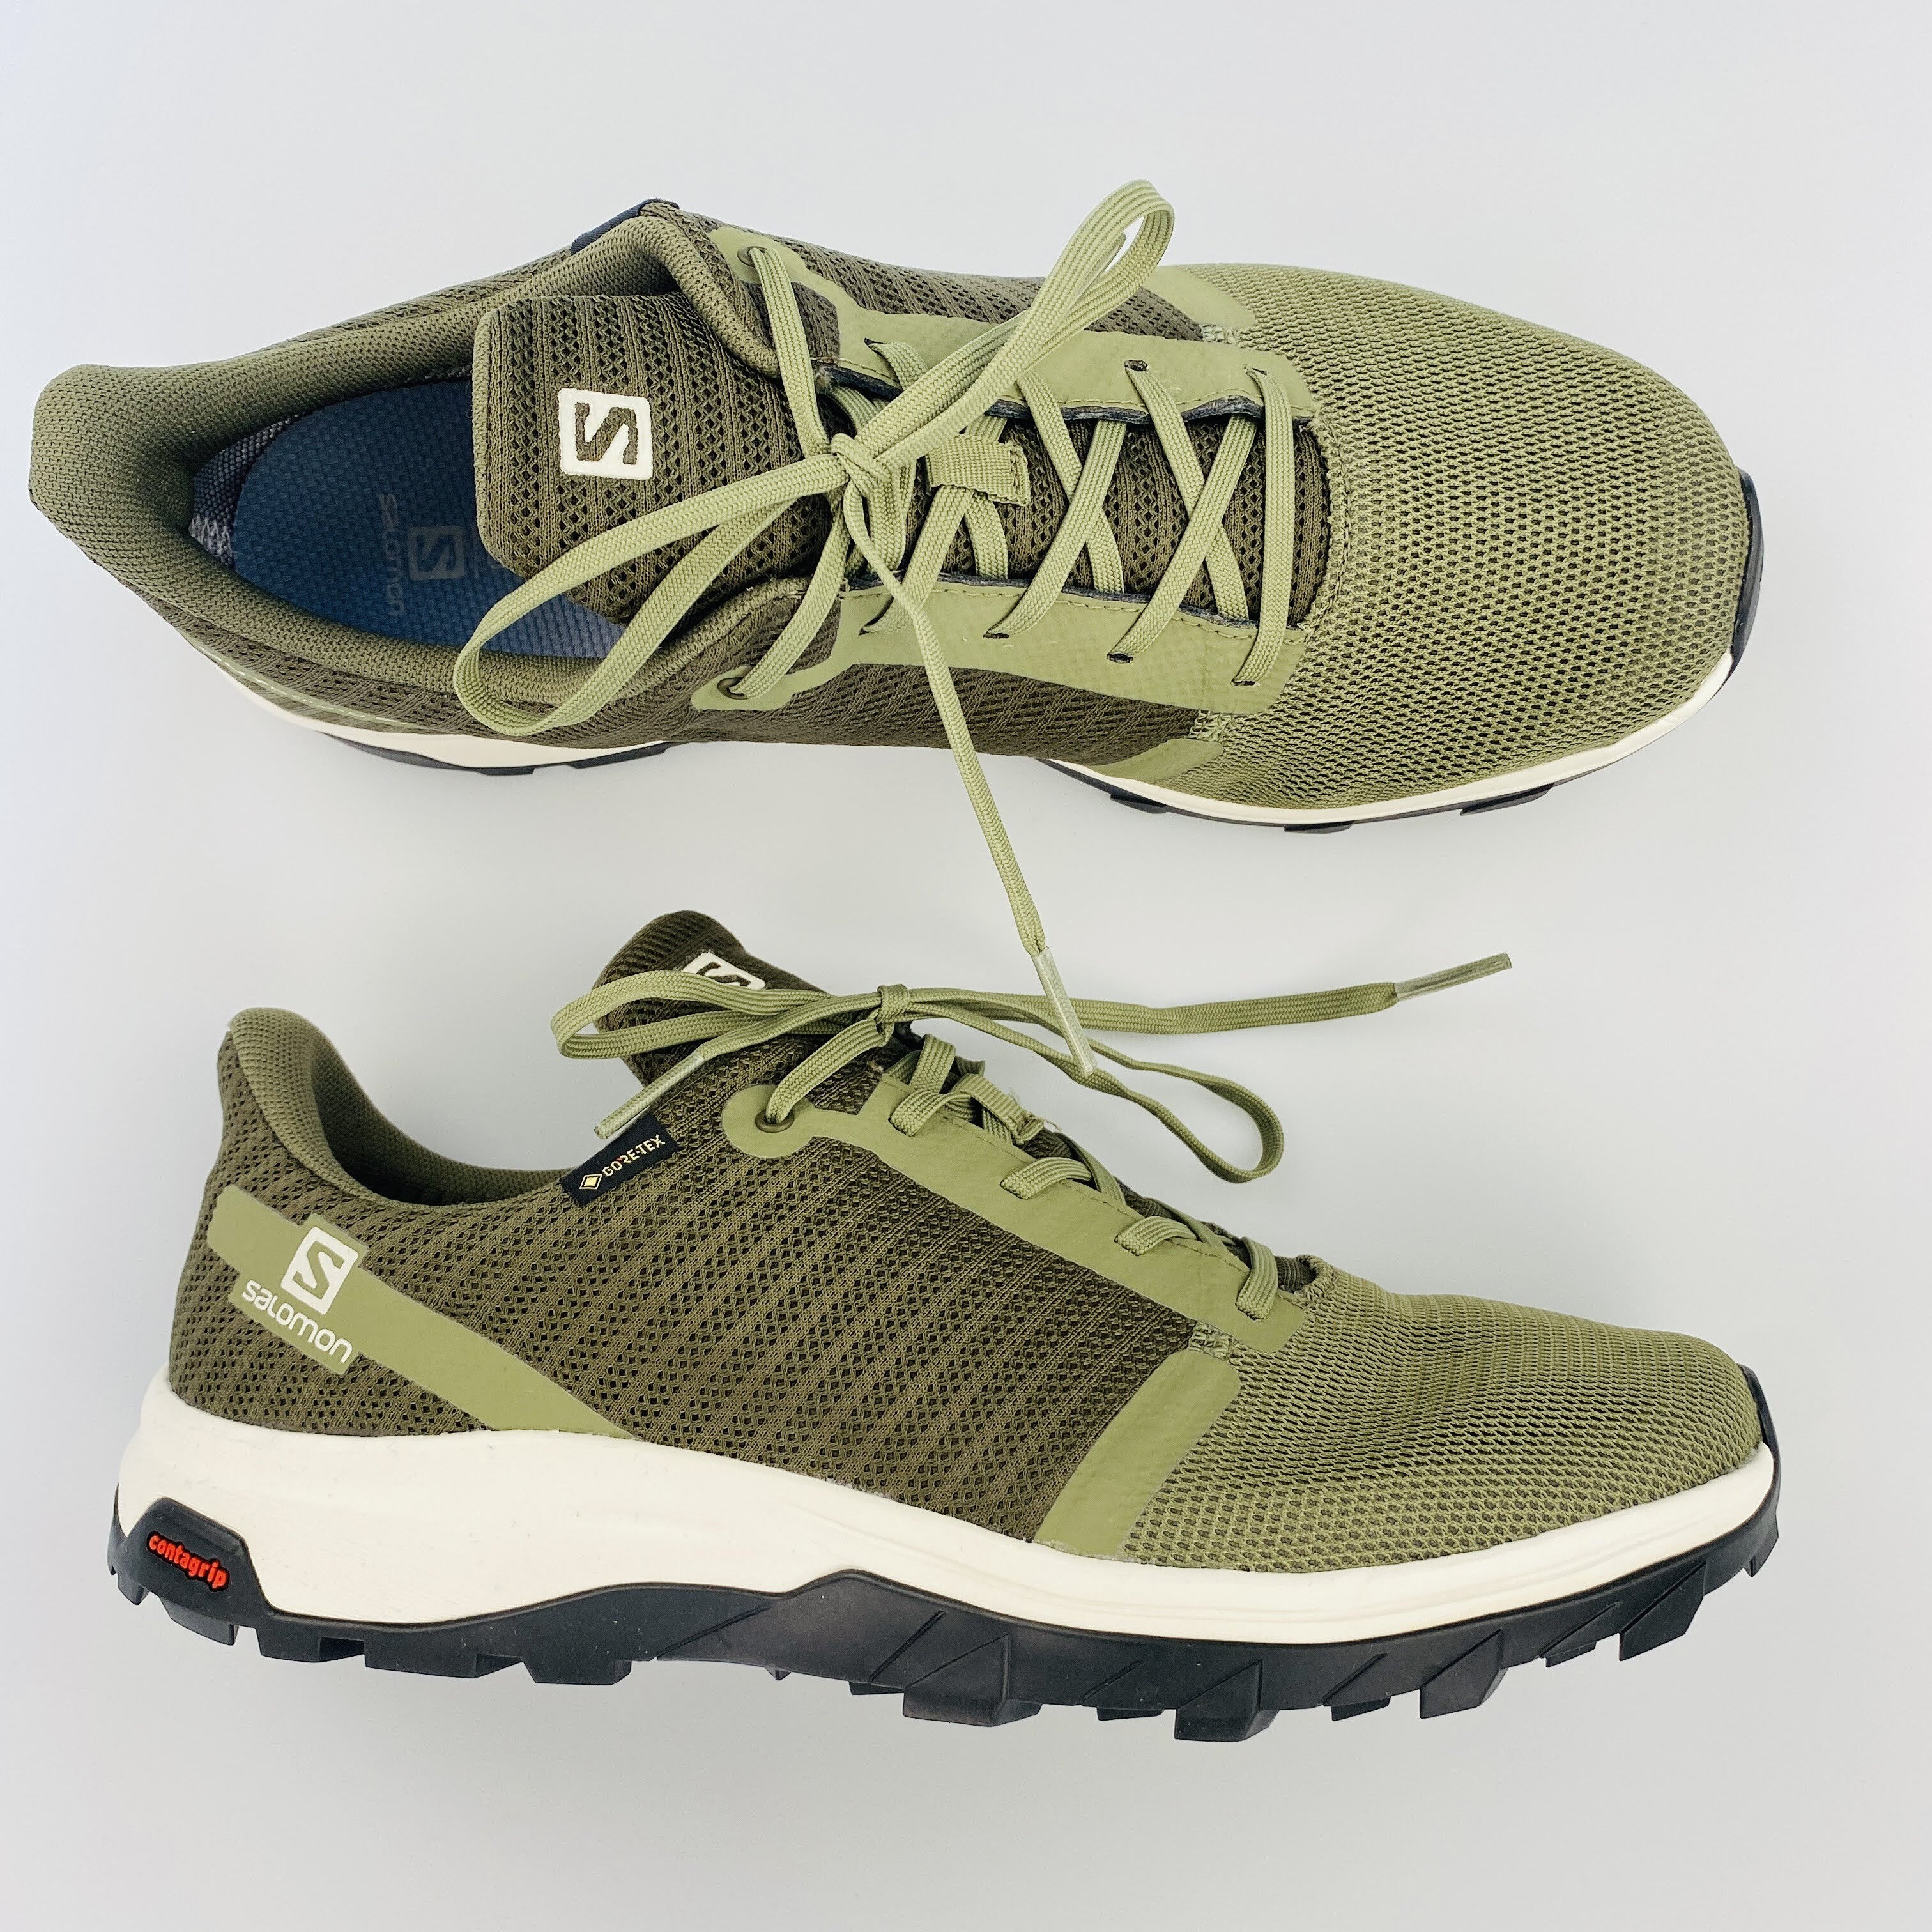 Salomon Outbound Prism GTX - Seconde main Chaussures randonnée homme - Vert olive - 45.1/3 | Hardloop